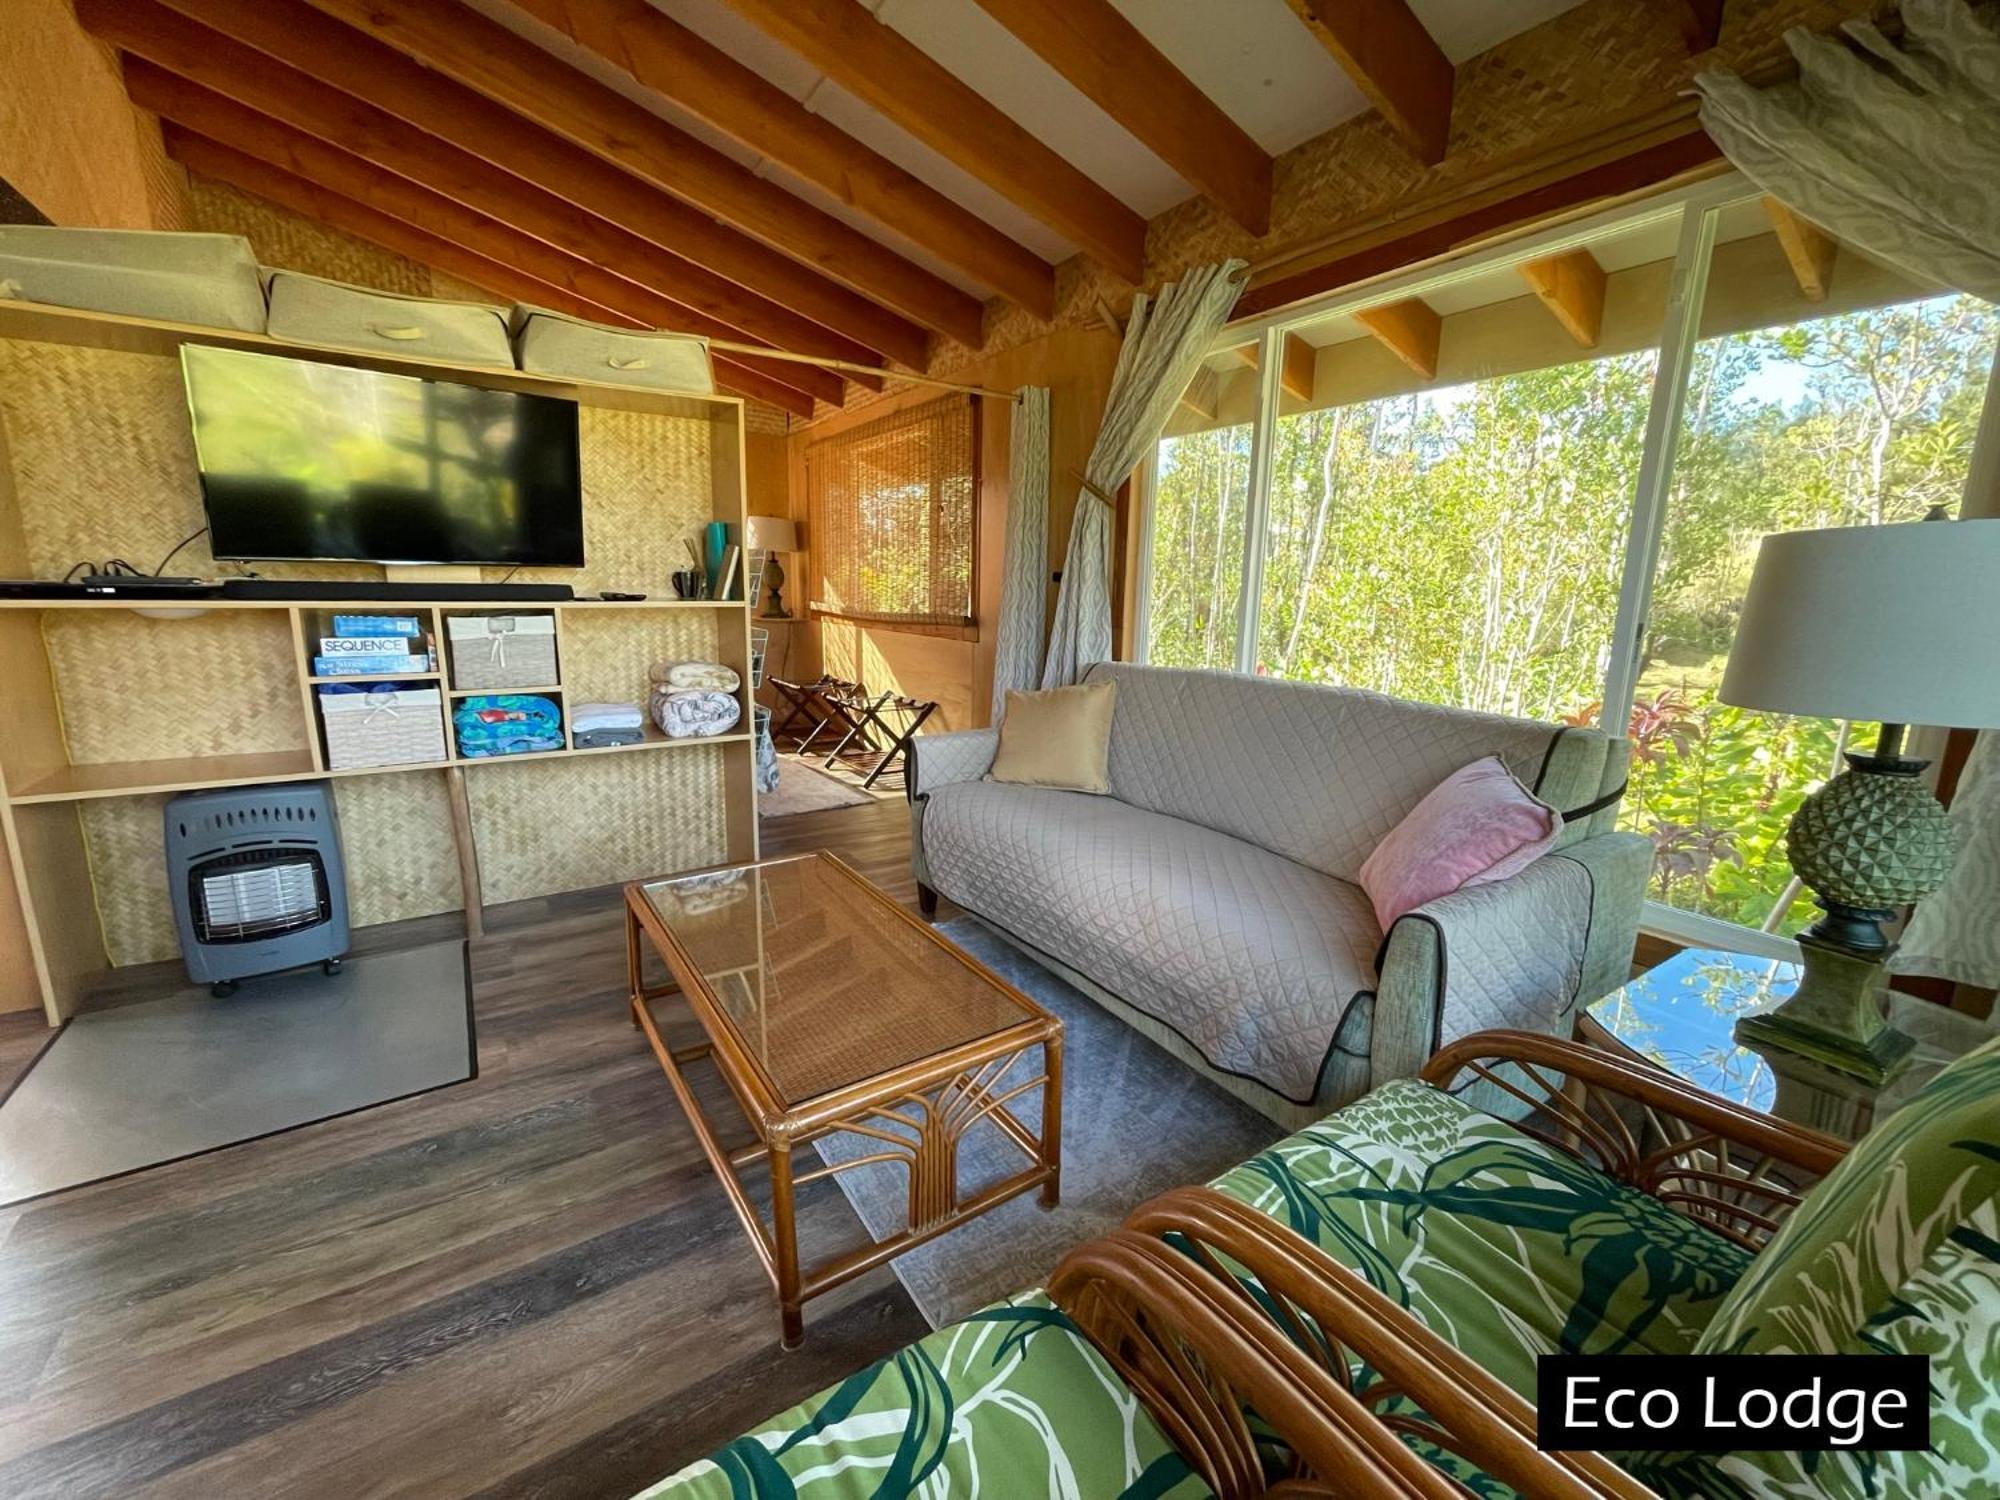 Volcano Eco Cabin & Eco Lodge Exterior foto